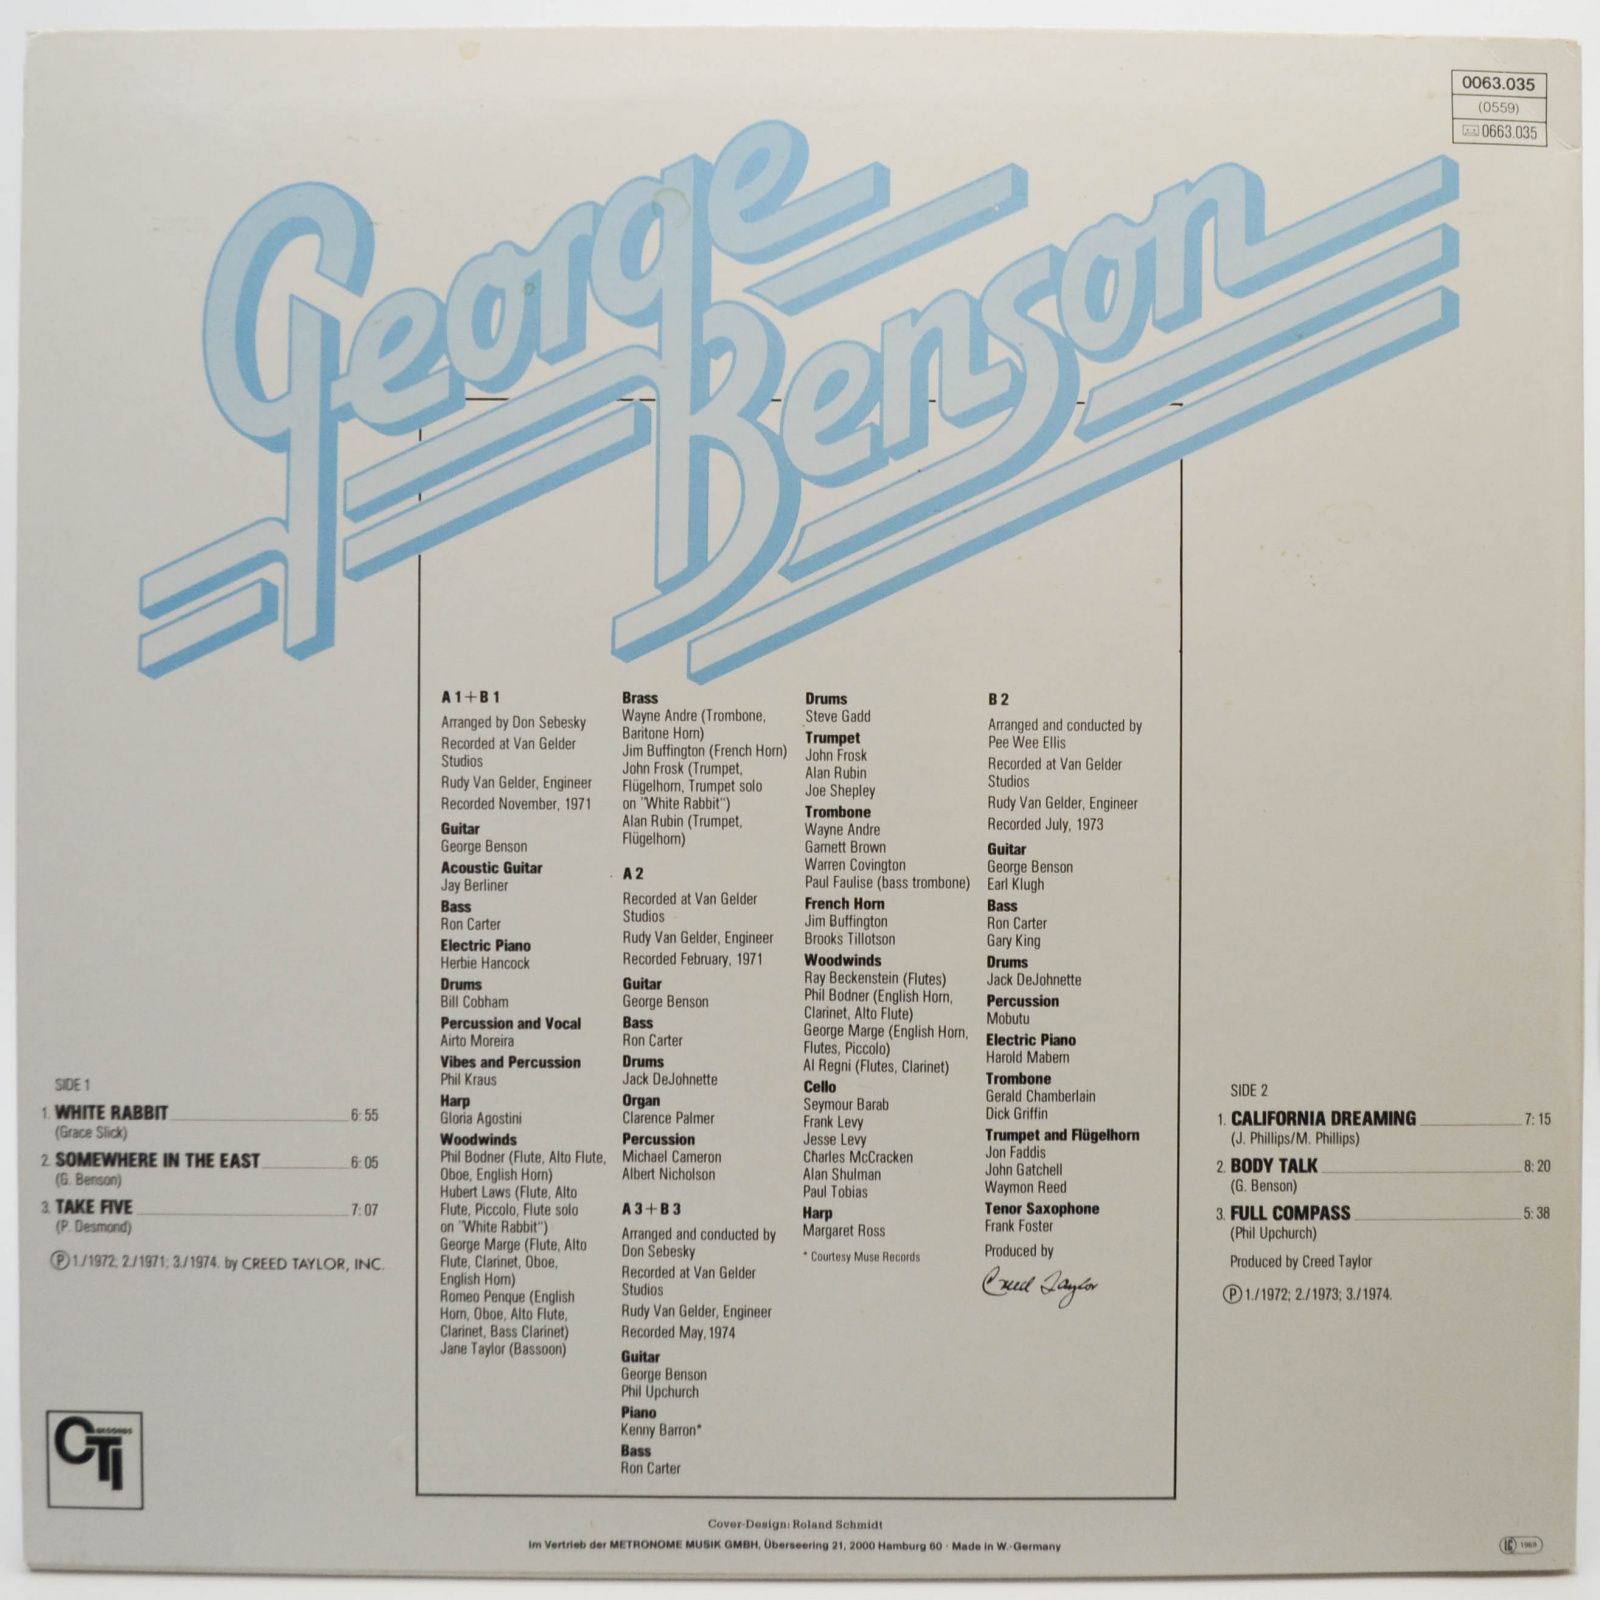 George Benson — The Best Of George Benson, 1978